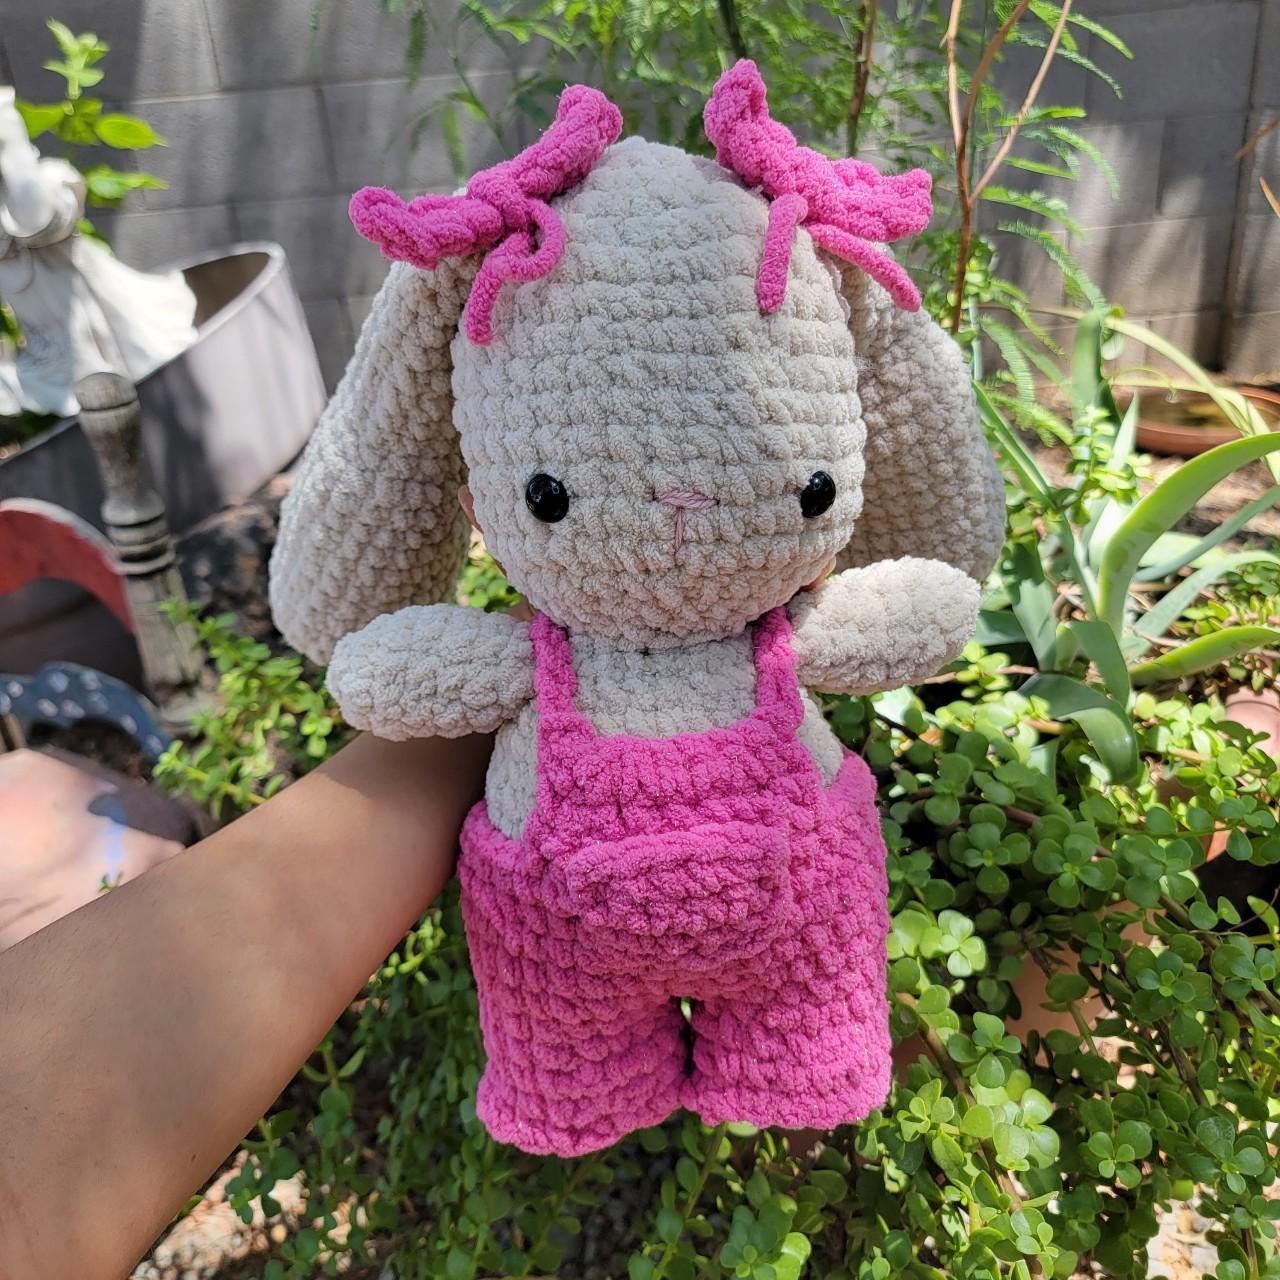 Most adorable handmade crochet light tan brown bunny - Depop